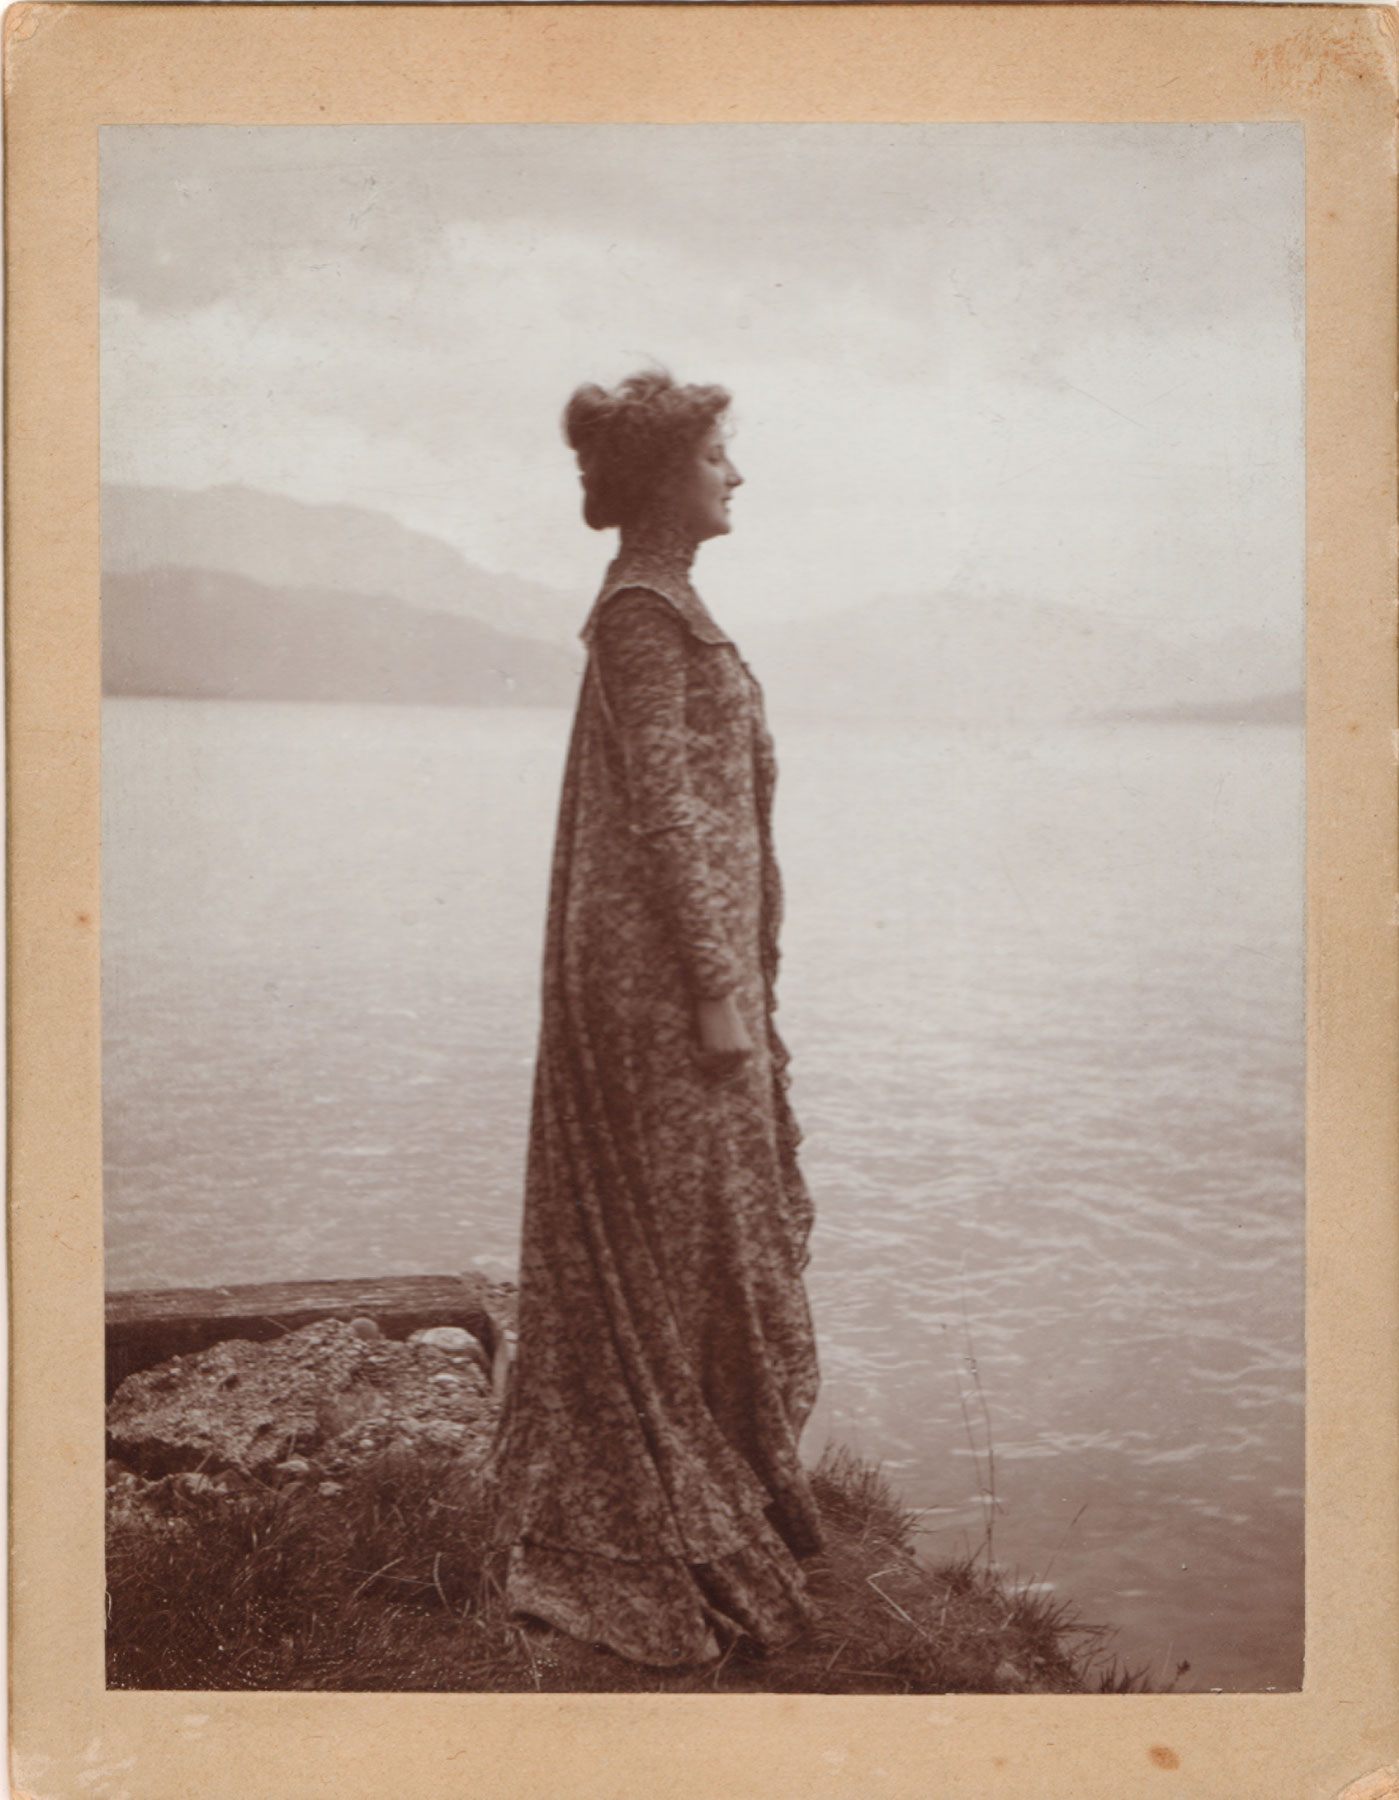 Emilie FlÃ¶ge fotografata da Klimt (1906) Â©Klimt Foundation, Vienna
